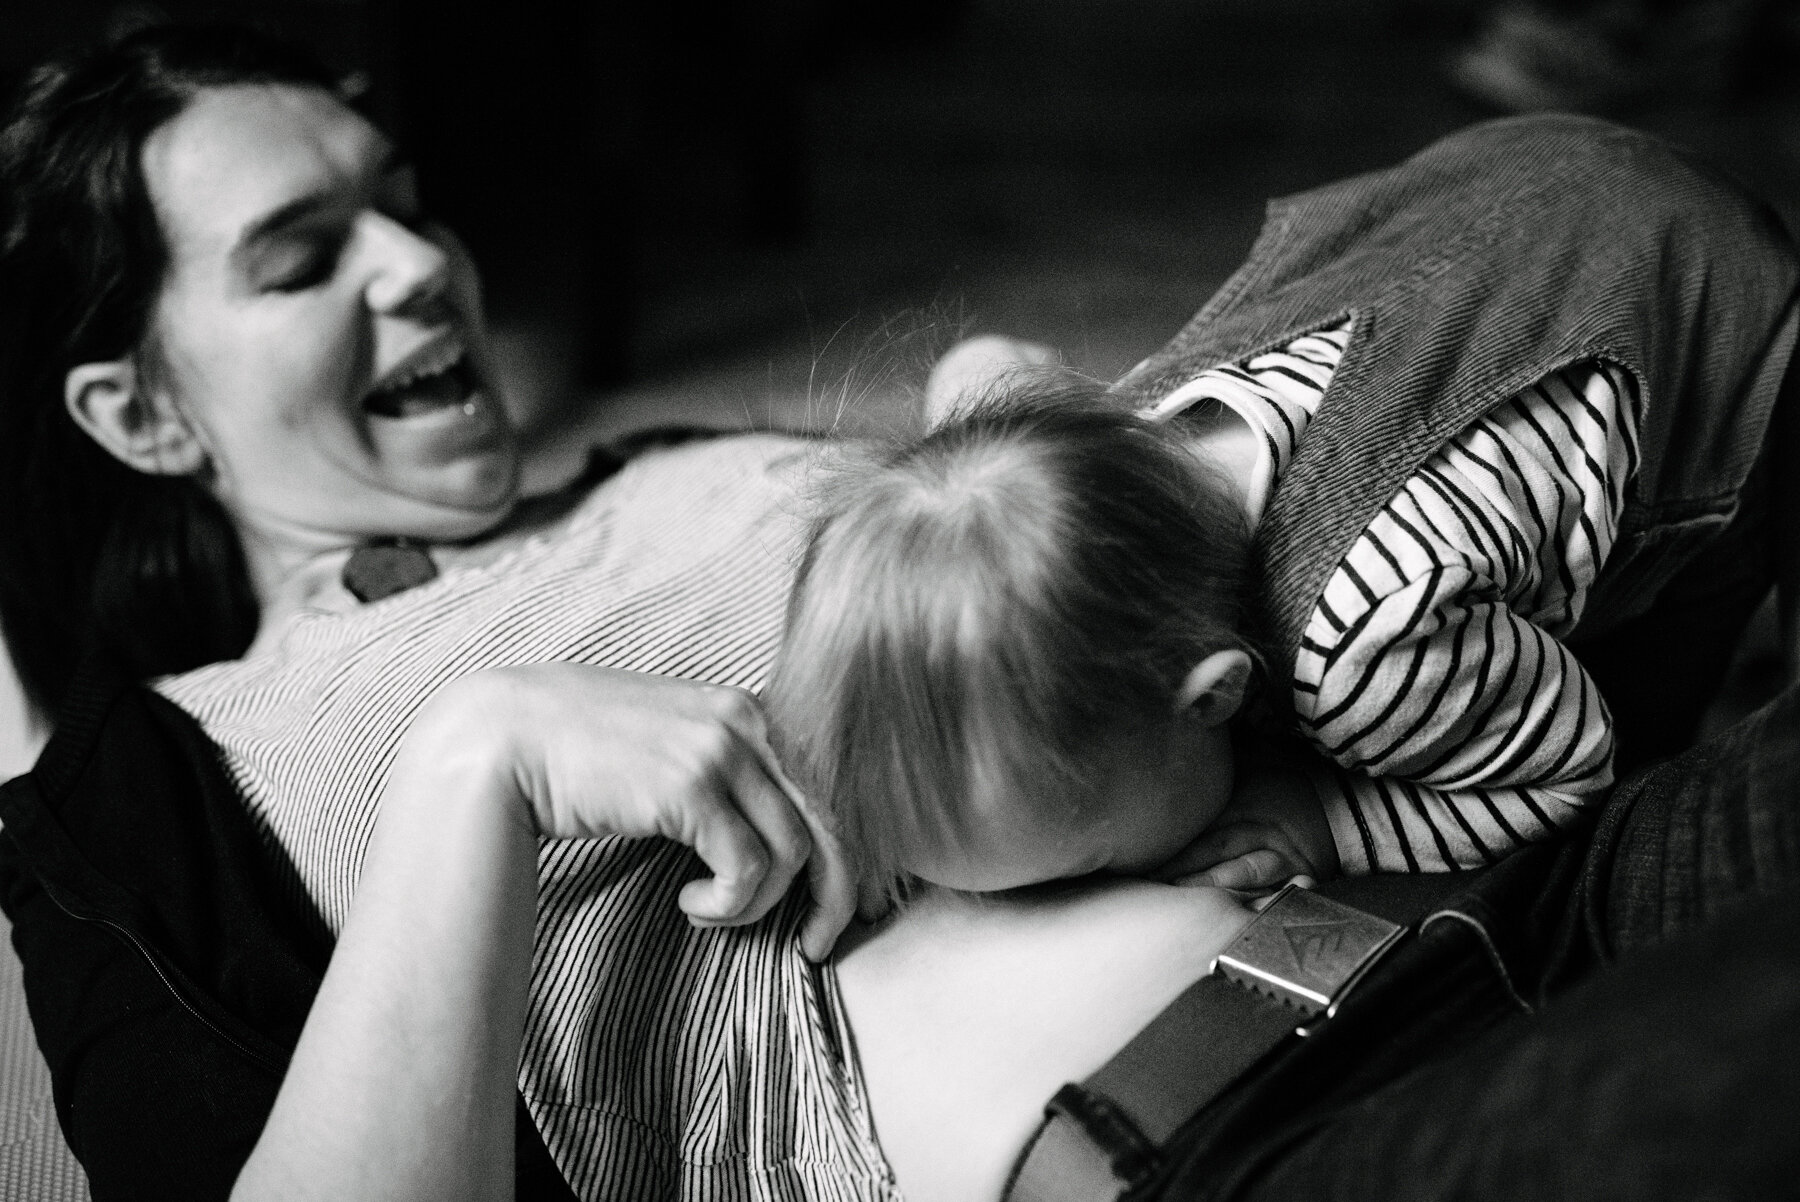 seance-mere-maman-enfant-maternite-allaitement-a-domicile-appartement-montrealais-intimite-photographe-famille-documentaire-a-montreal-marianne-charland-078-2.jpg